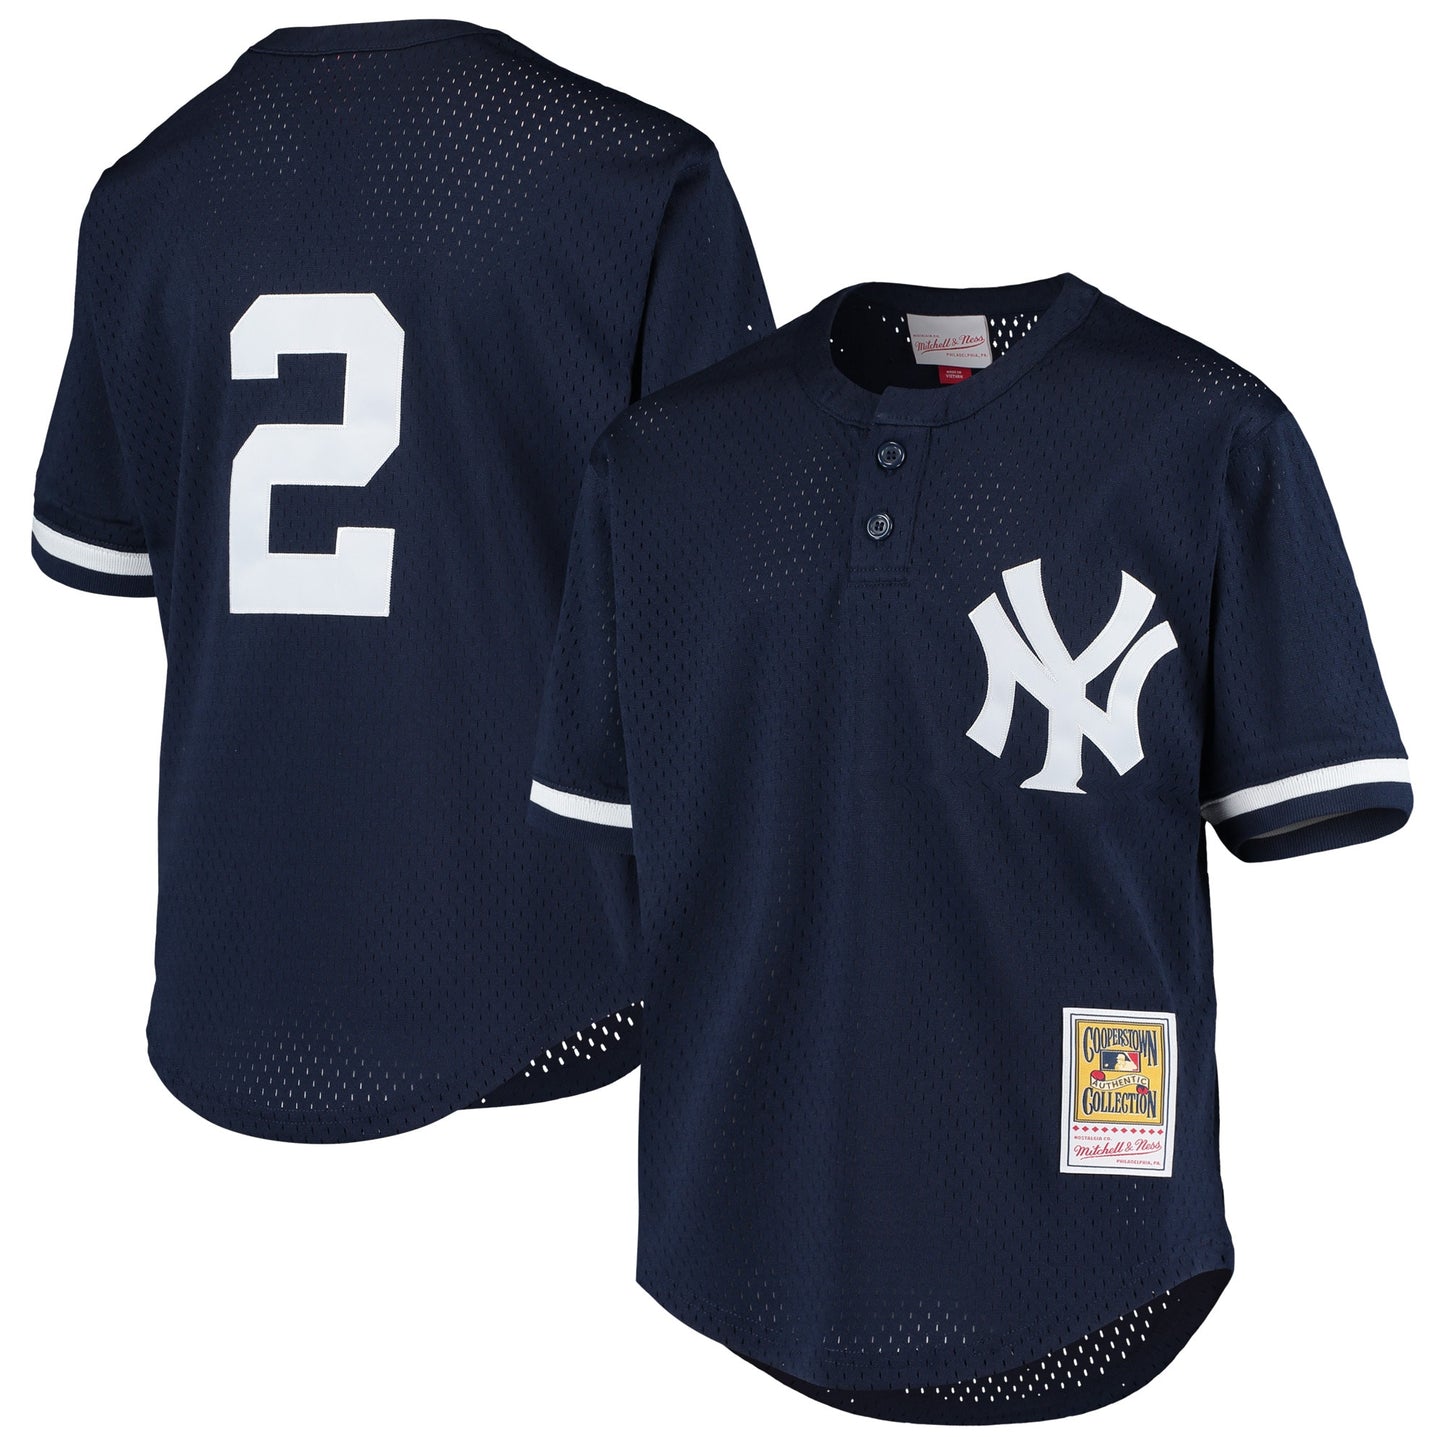 Derek Jeter New York Yankees Mitchell & Ness Youth Cooperstown Collection Mesh Batting Practice Jersey - Navy